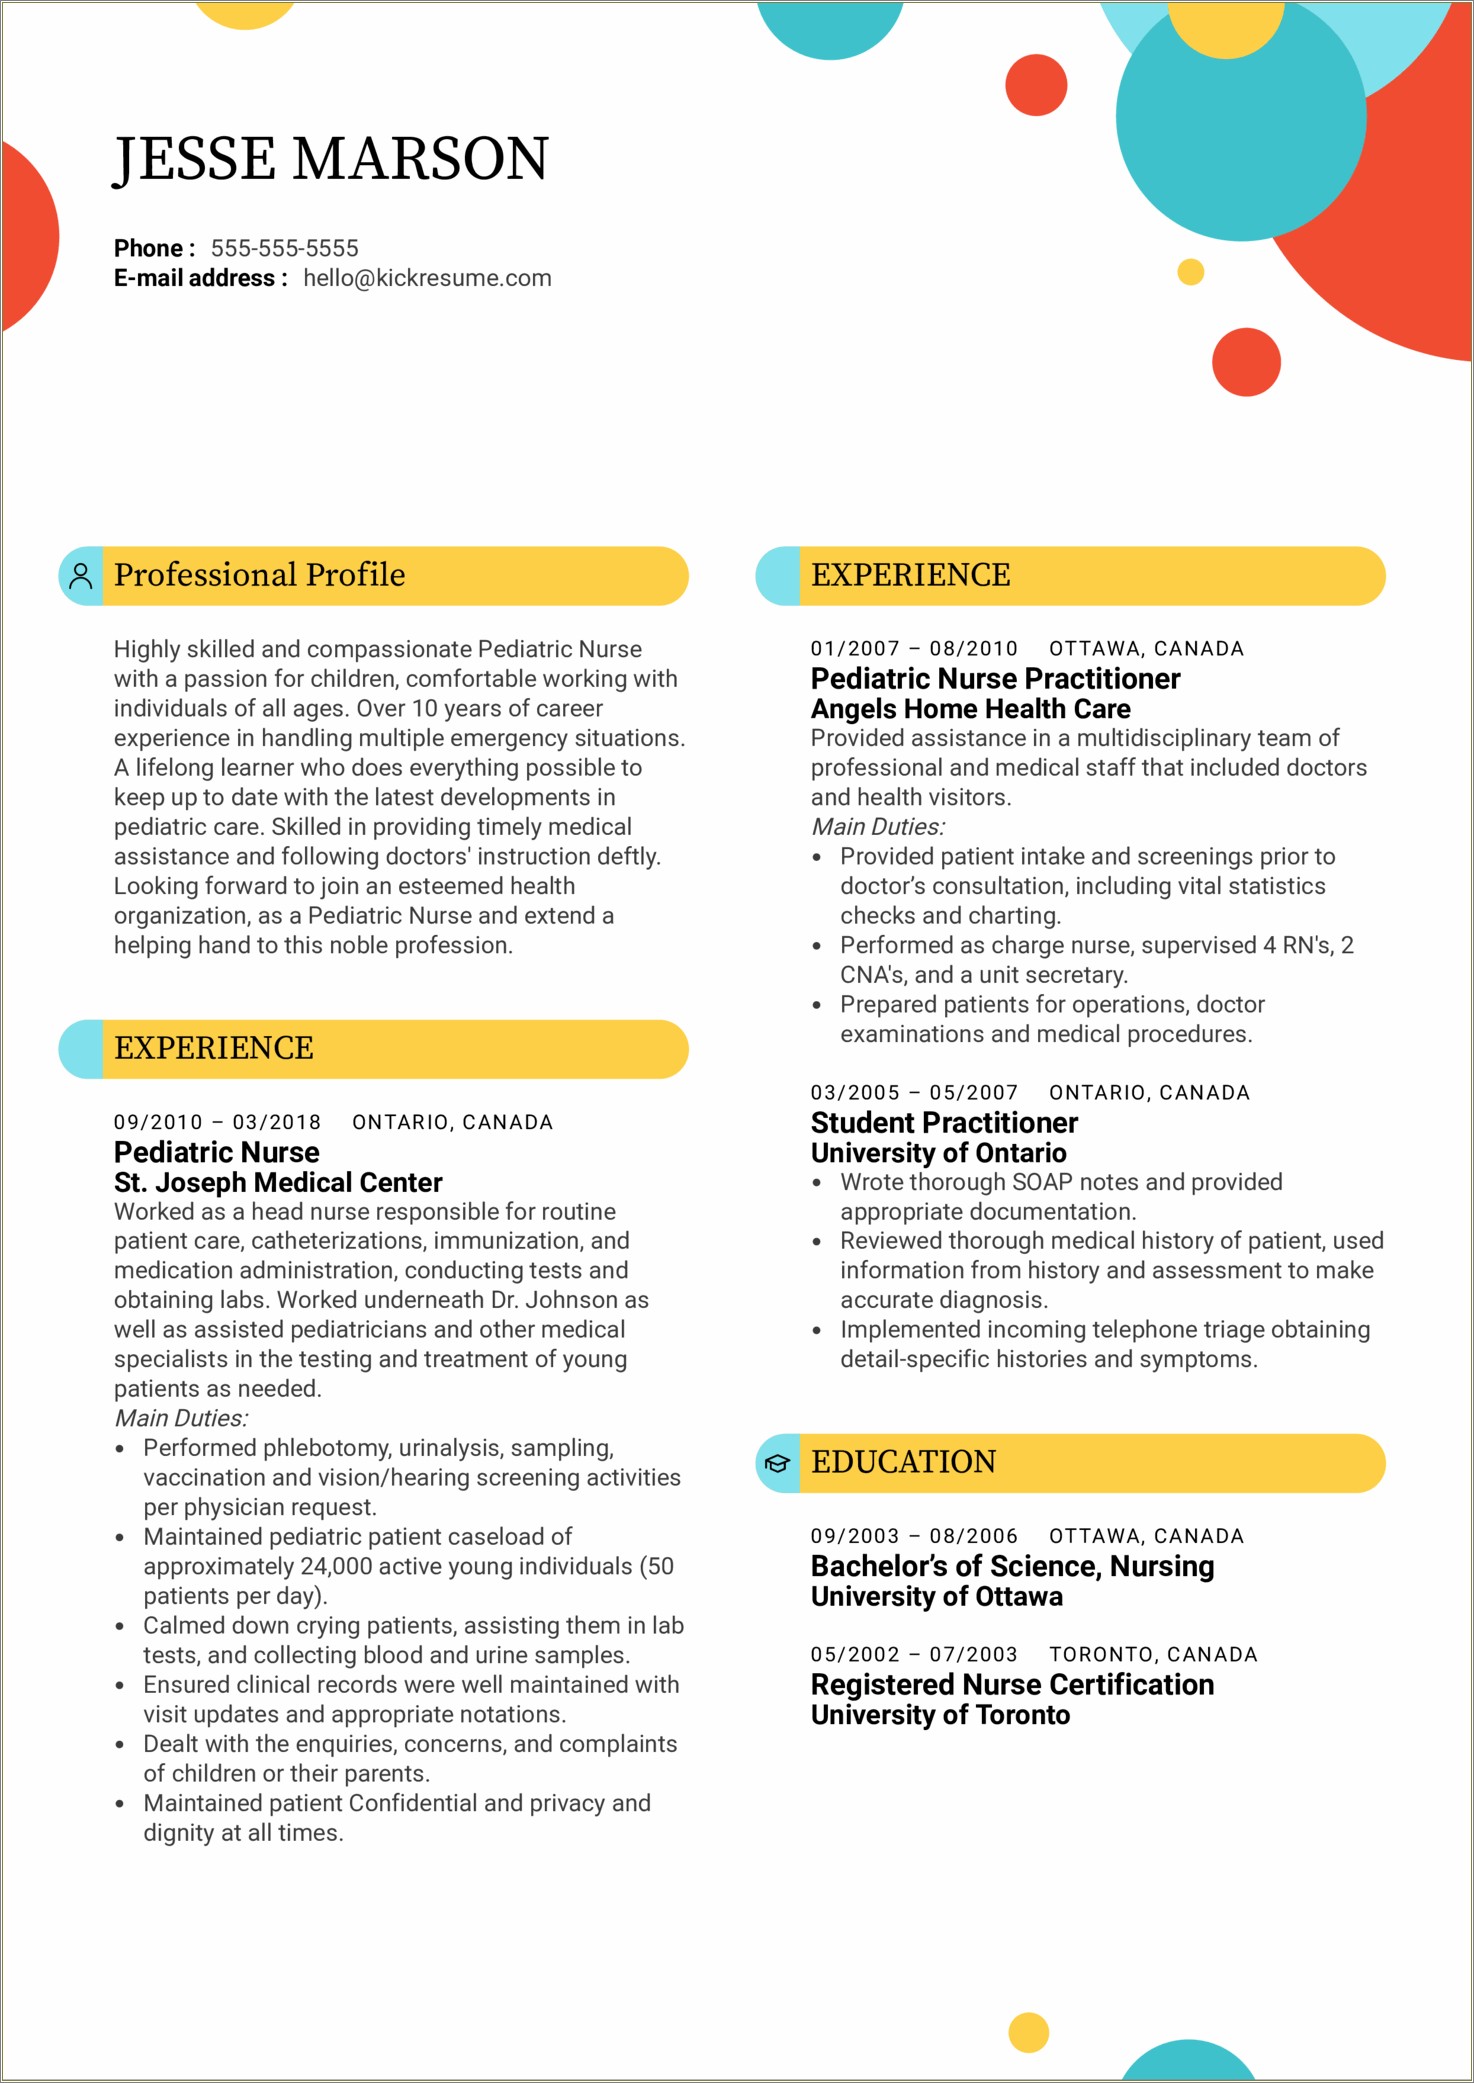 Resume Job Description For Pediatric Home Health Nurse